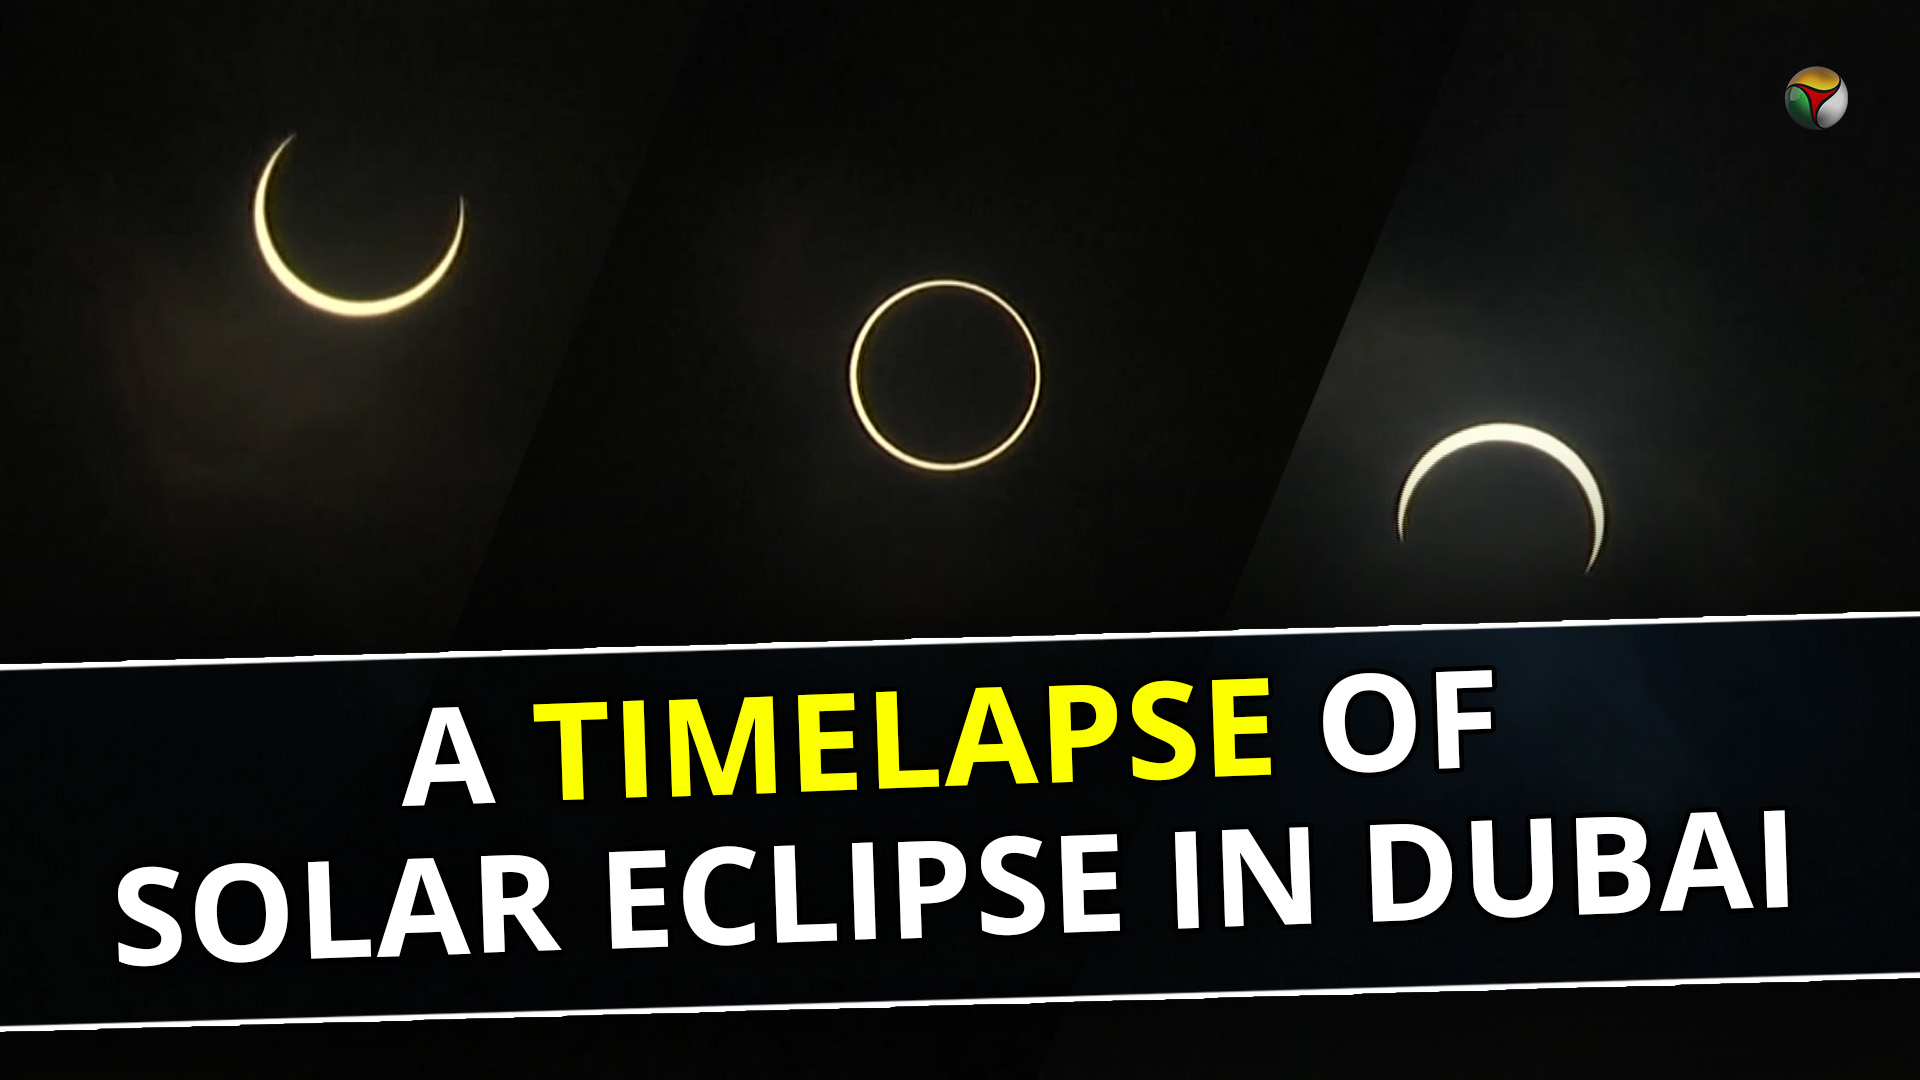 A timelapse of solar eclipse in Dubai